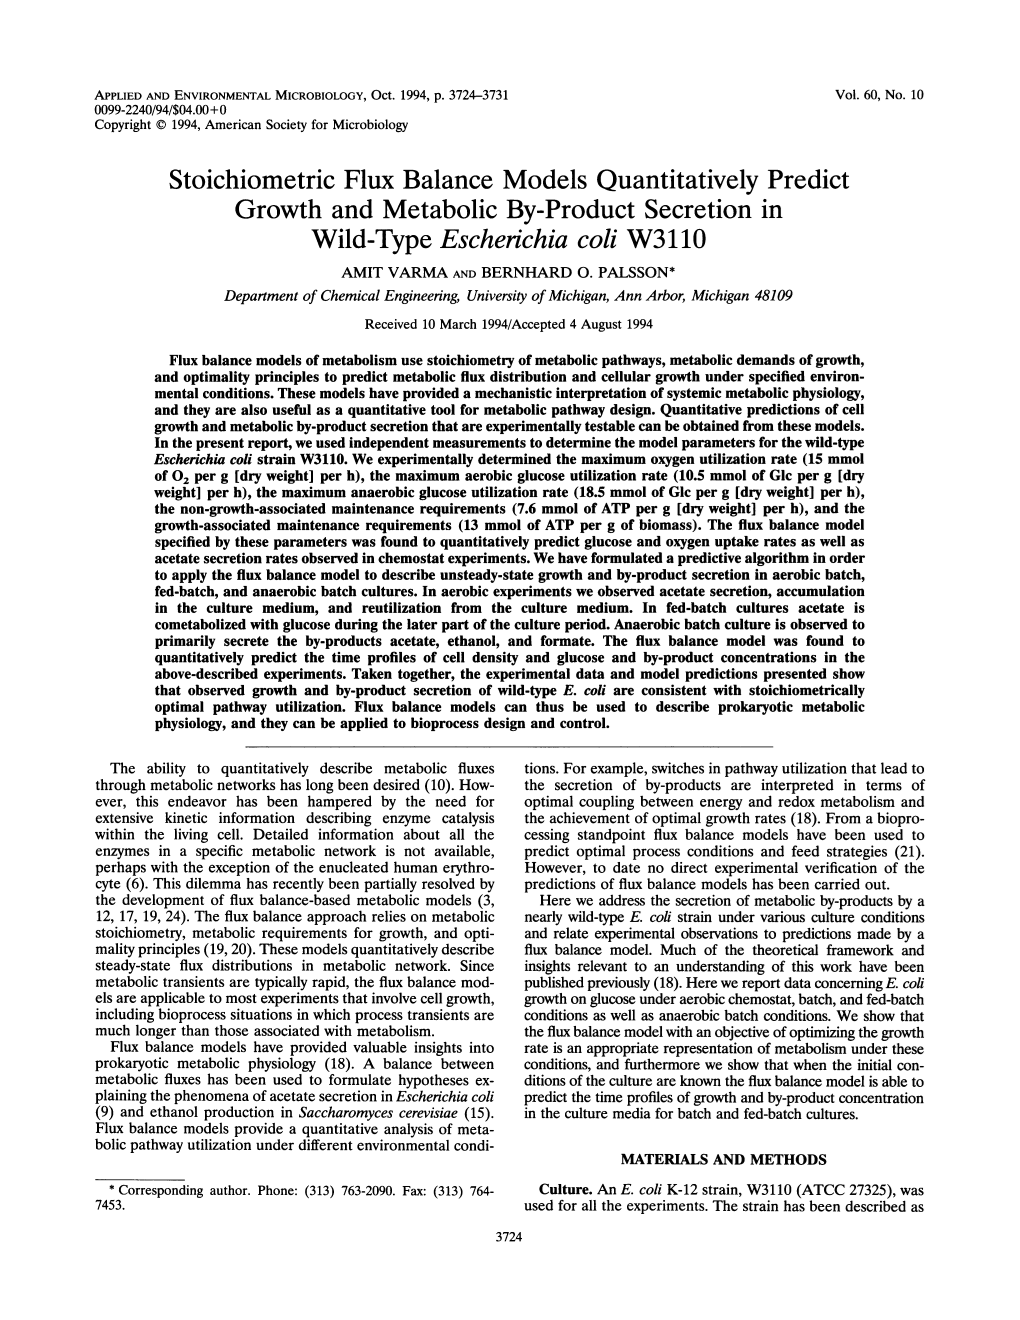 Stoichiometric Flux Balance Models Quantitatively Predict Growth and Metabolic By-Product Secretion in Wild-Type Escherichia Coli W3110